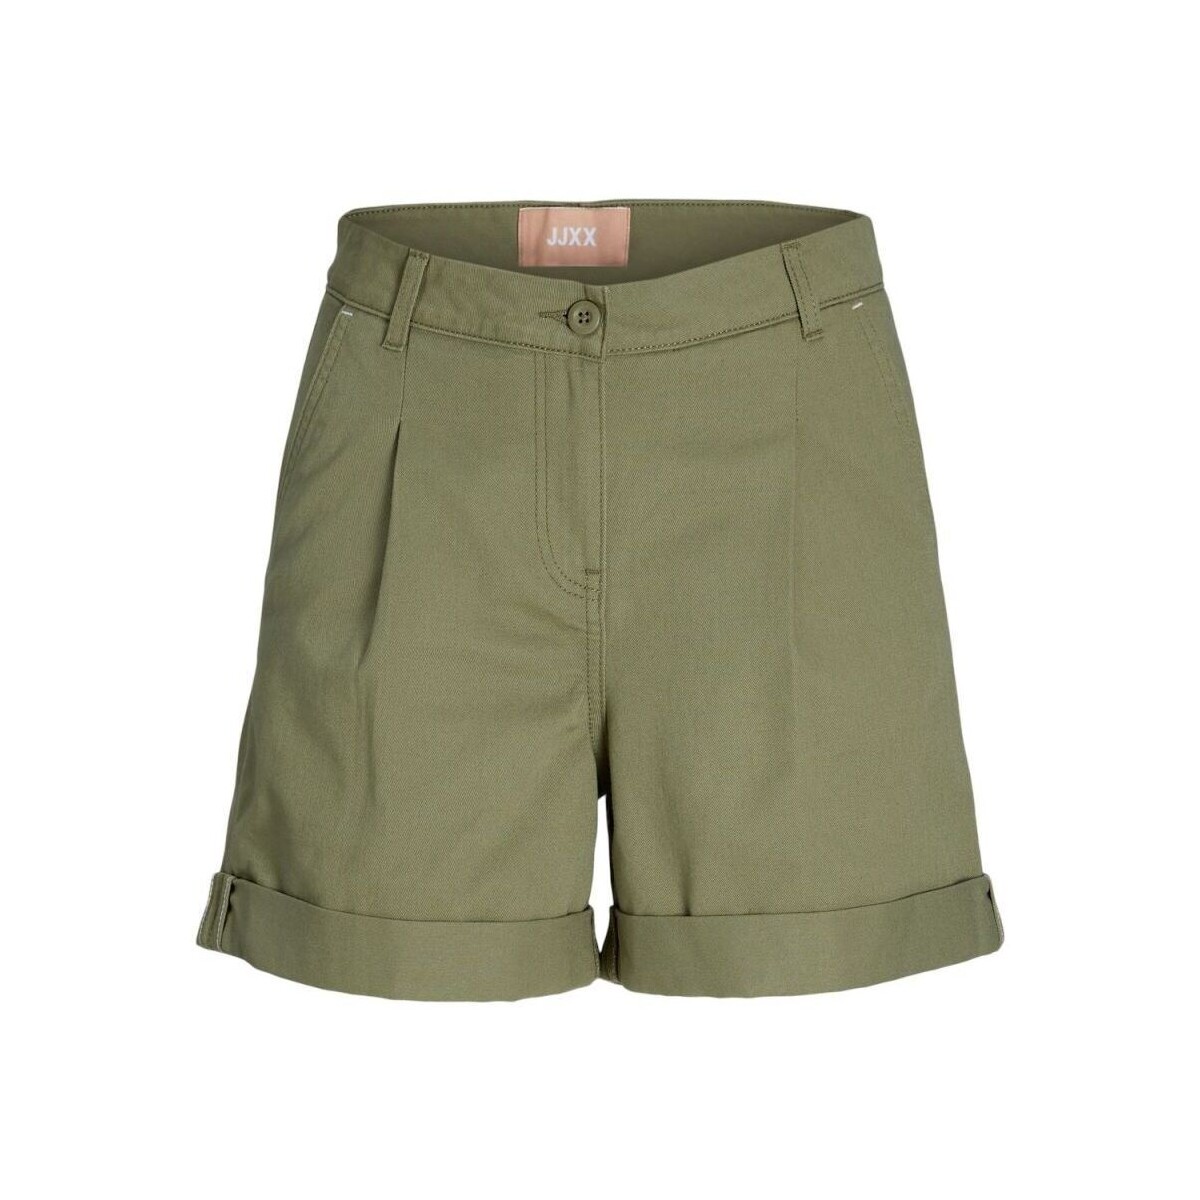 Textil Mulher Shorts / Bermudas Jjxx 12253014 MADDY SHORTS-ALOE Verde